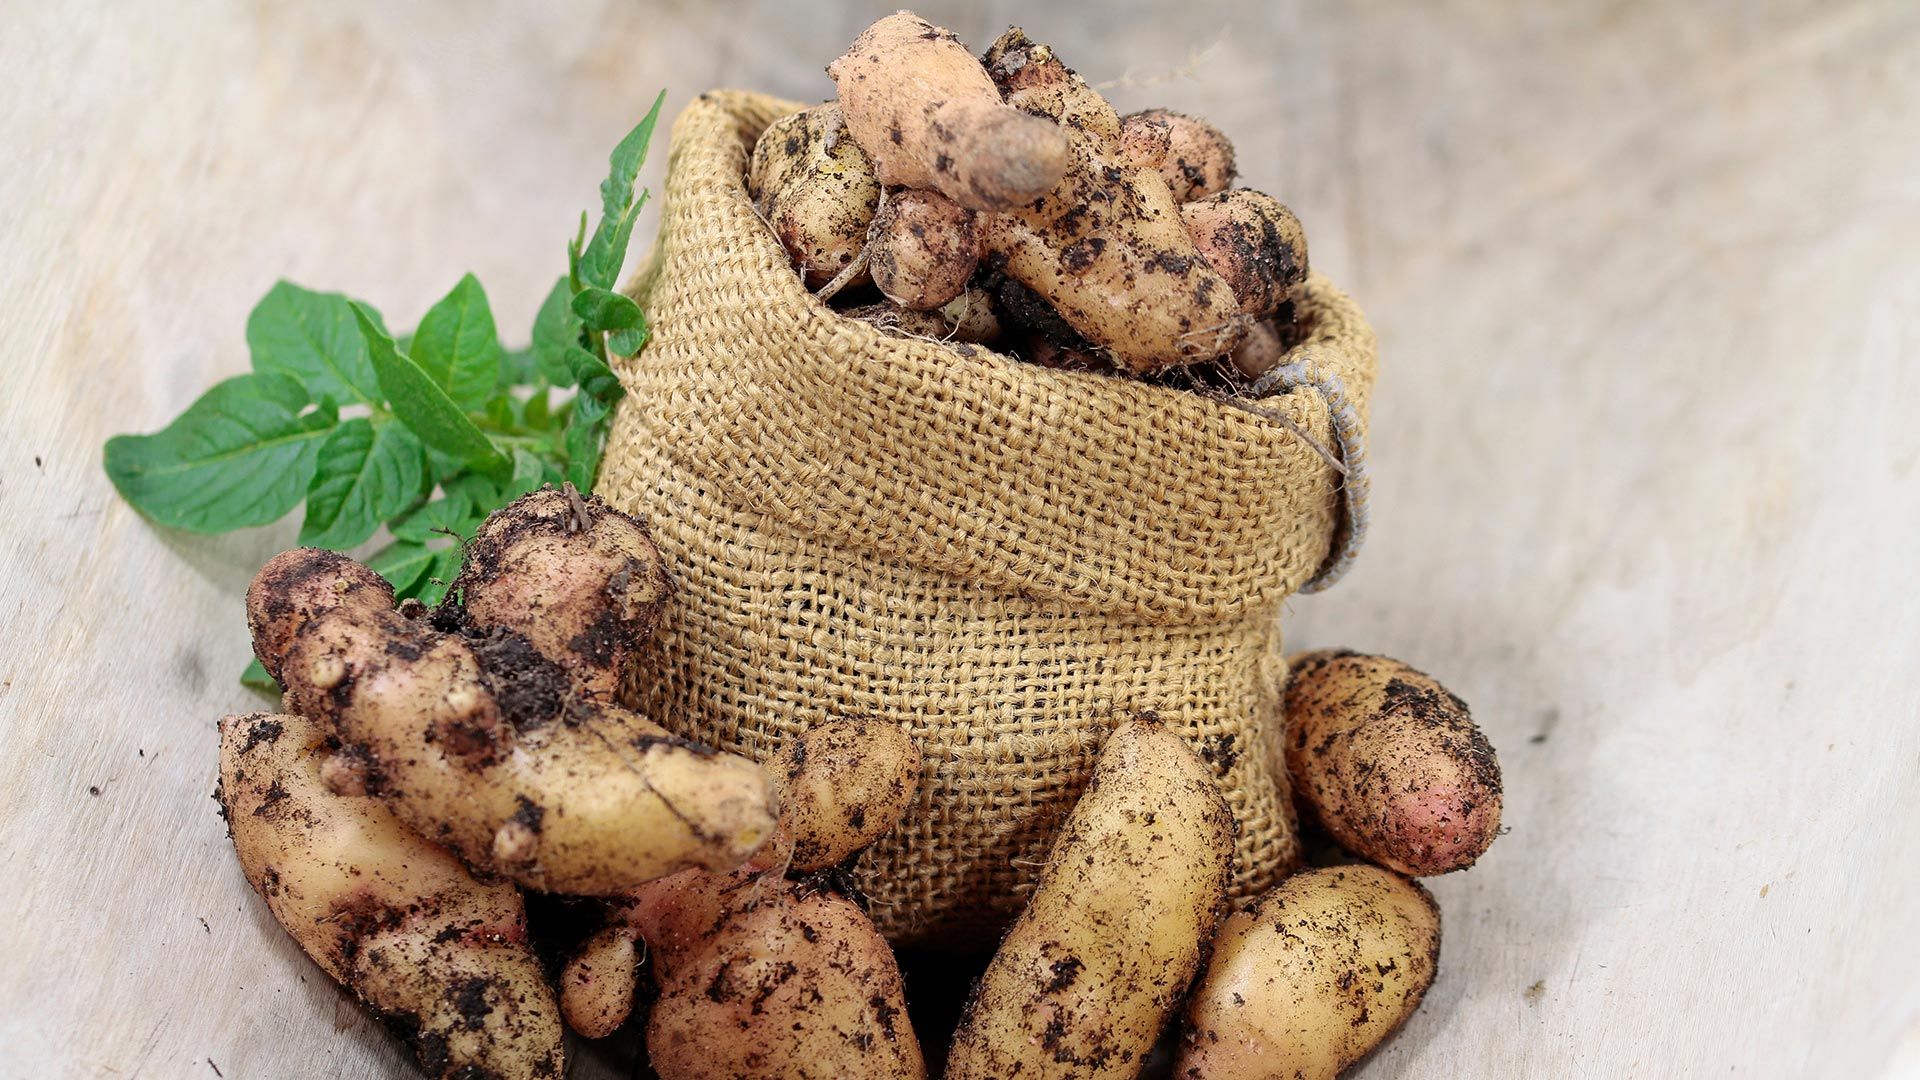  Kartoffel Hintergrundbild 1920x1080. Can Hybrid Herbicide affect potato size and shape?